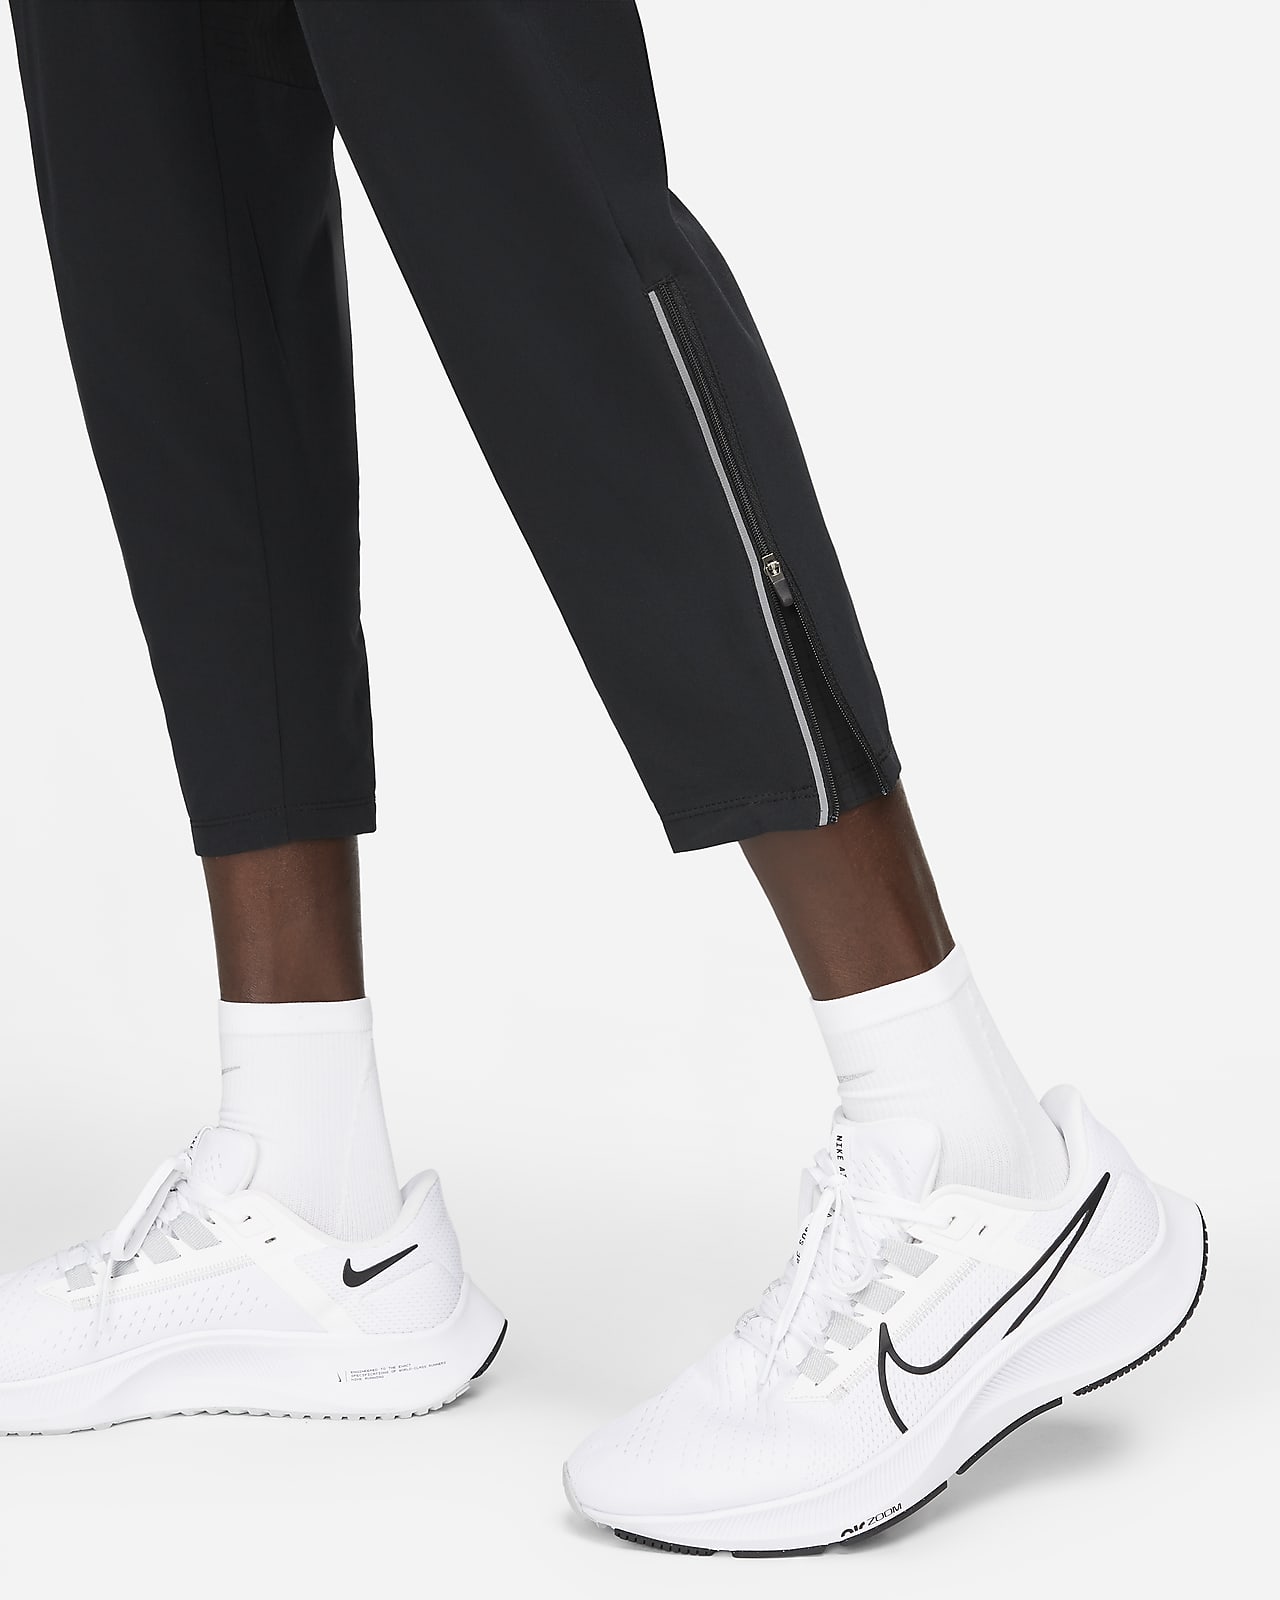 Nike Women's Power Classic Gym Pants Black 933832-010 Black Size Medium